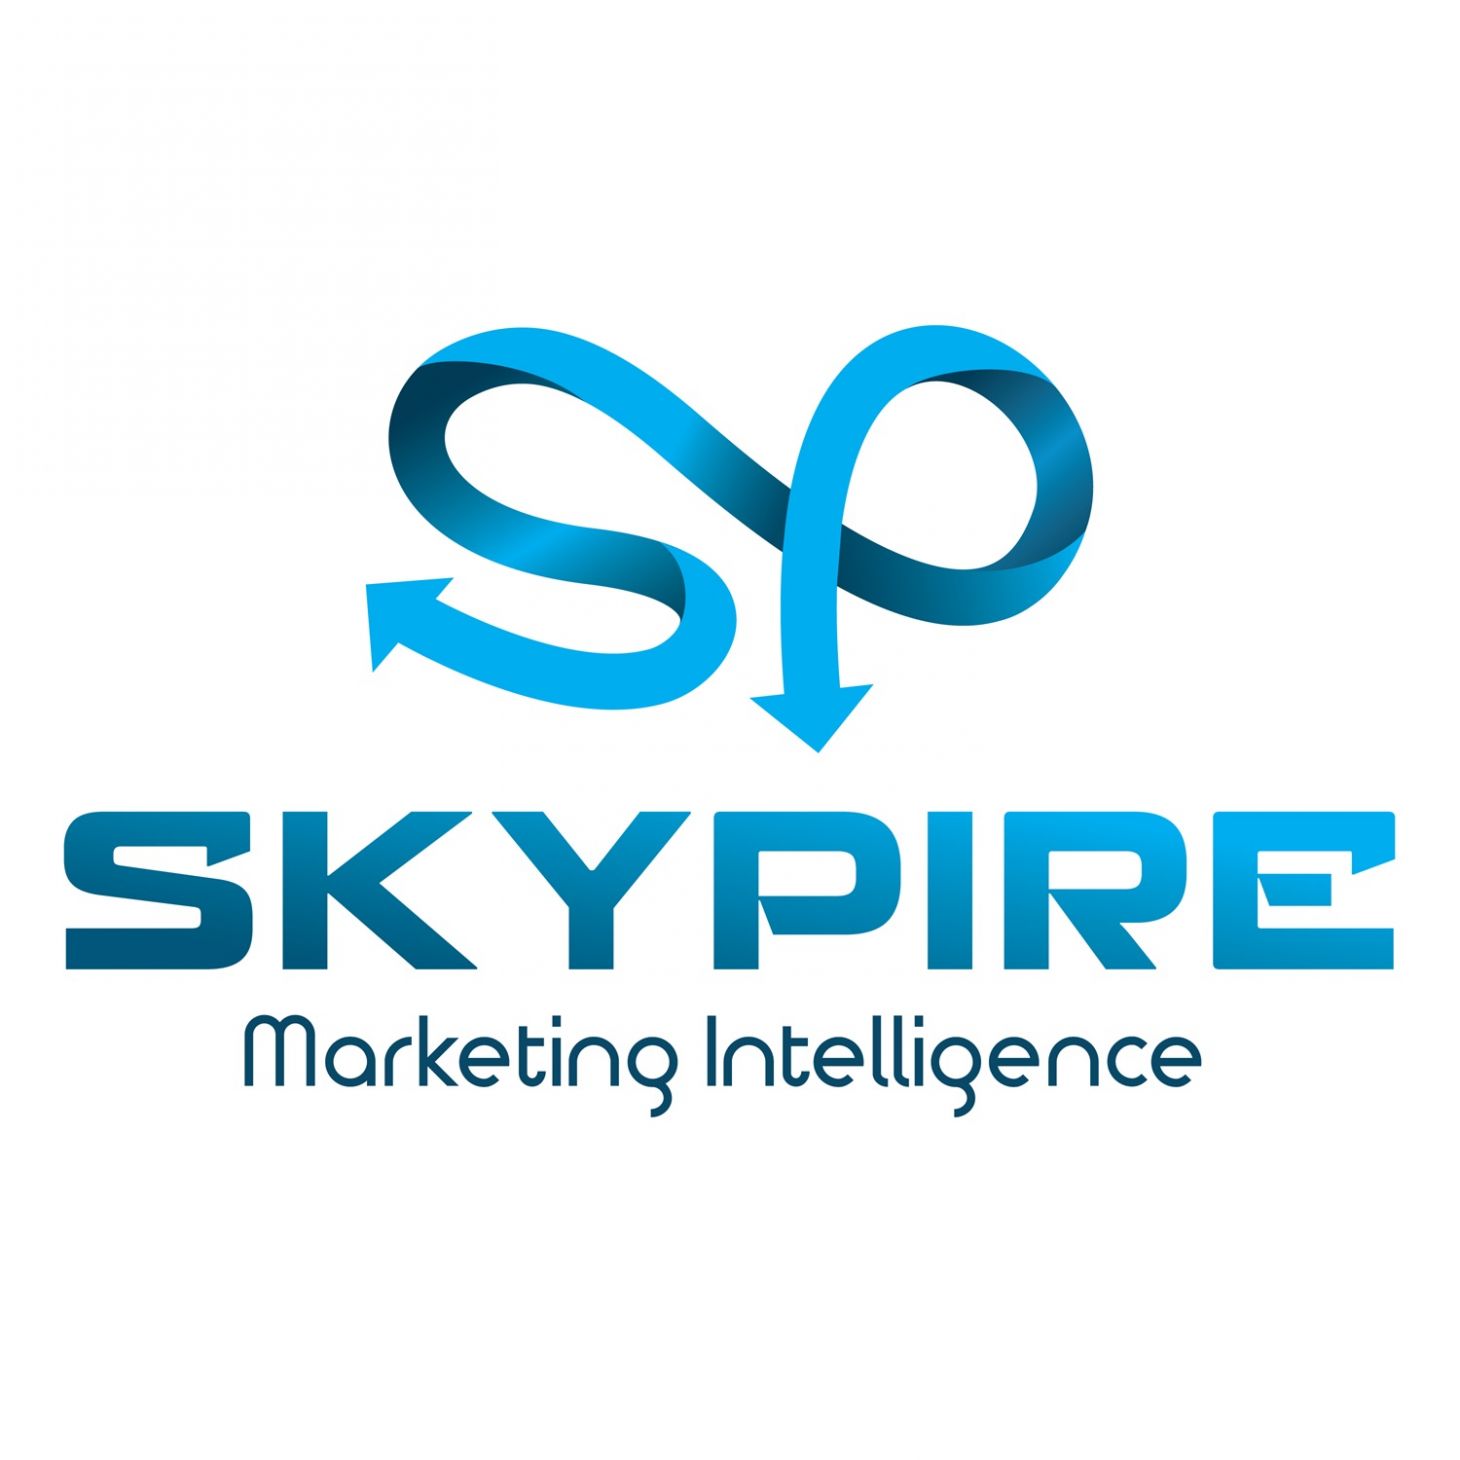 Skypire Marketing Intelligence Logo